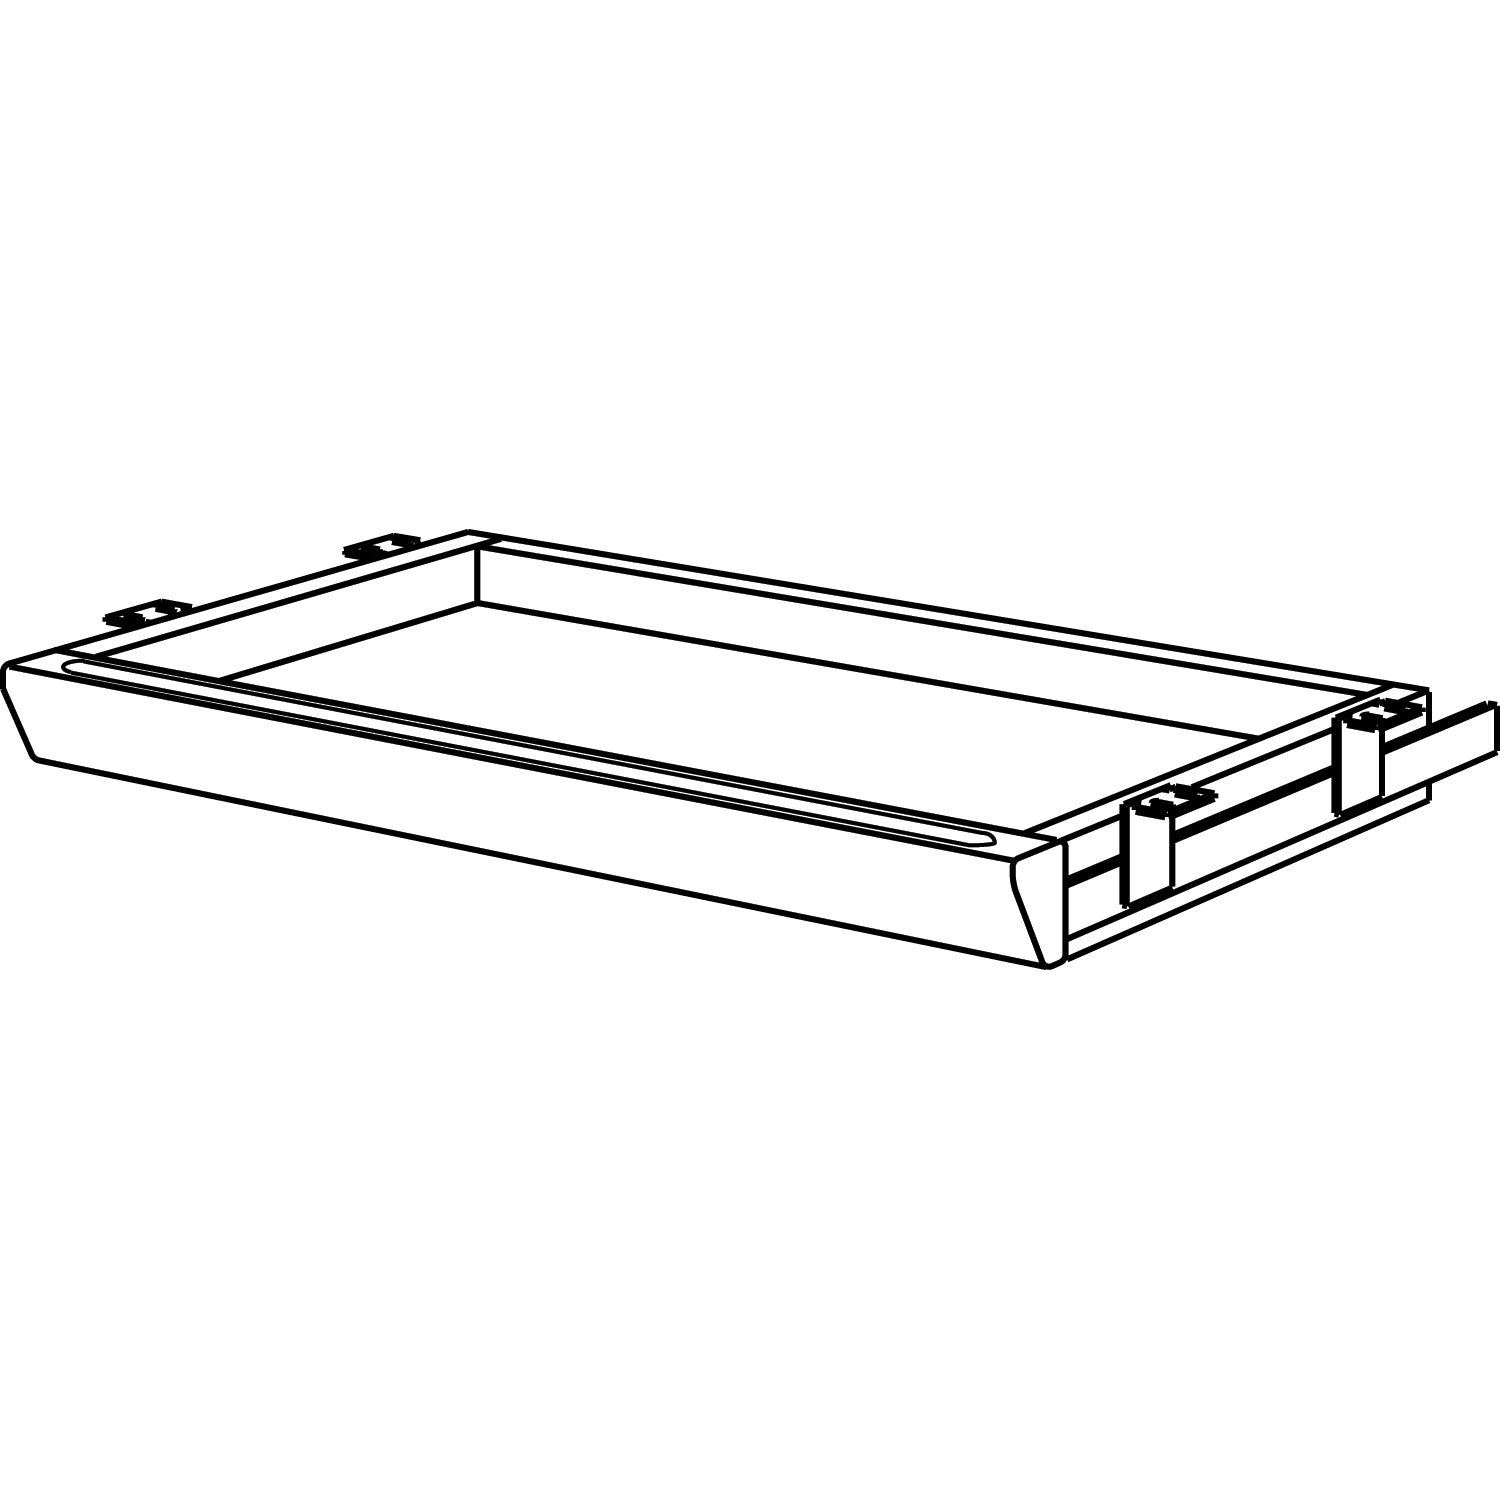 universal-pencil-drawer-accessory-metal-wood-2638w-x-1588d-x-275h-black_bshac99850 - 4